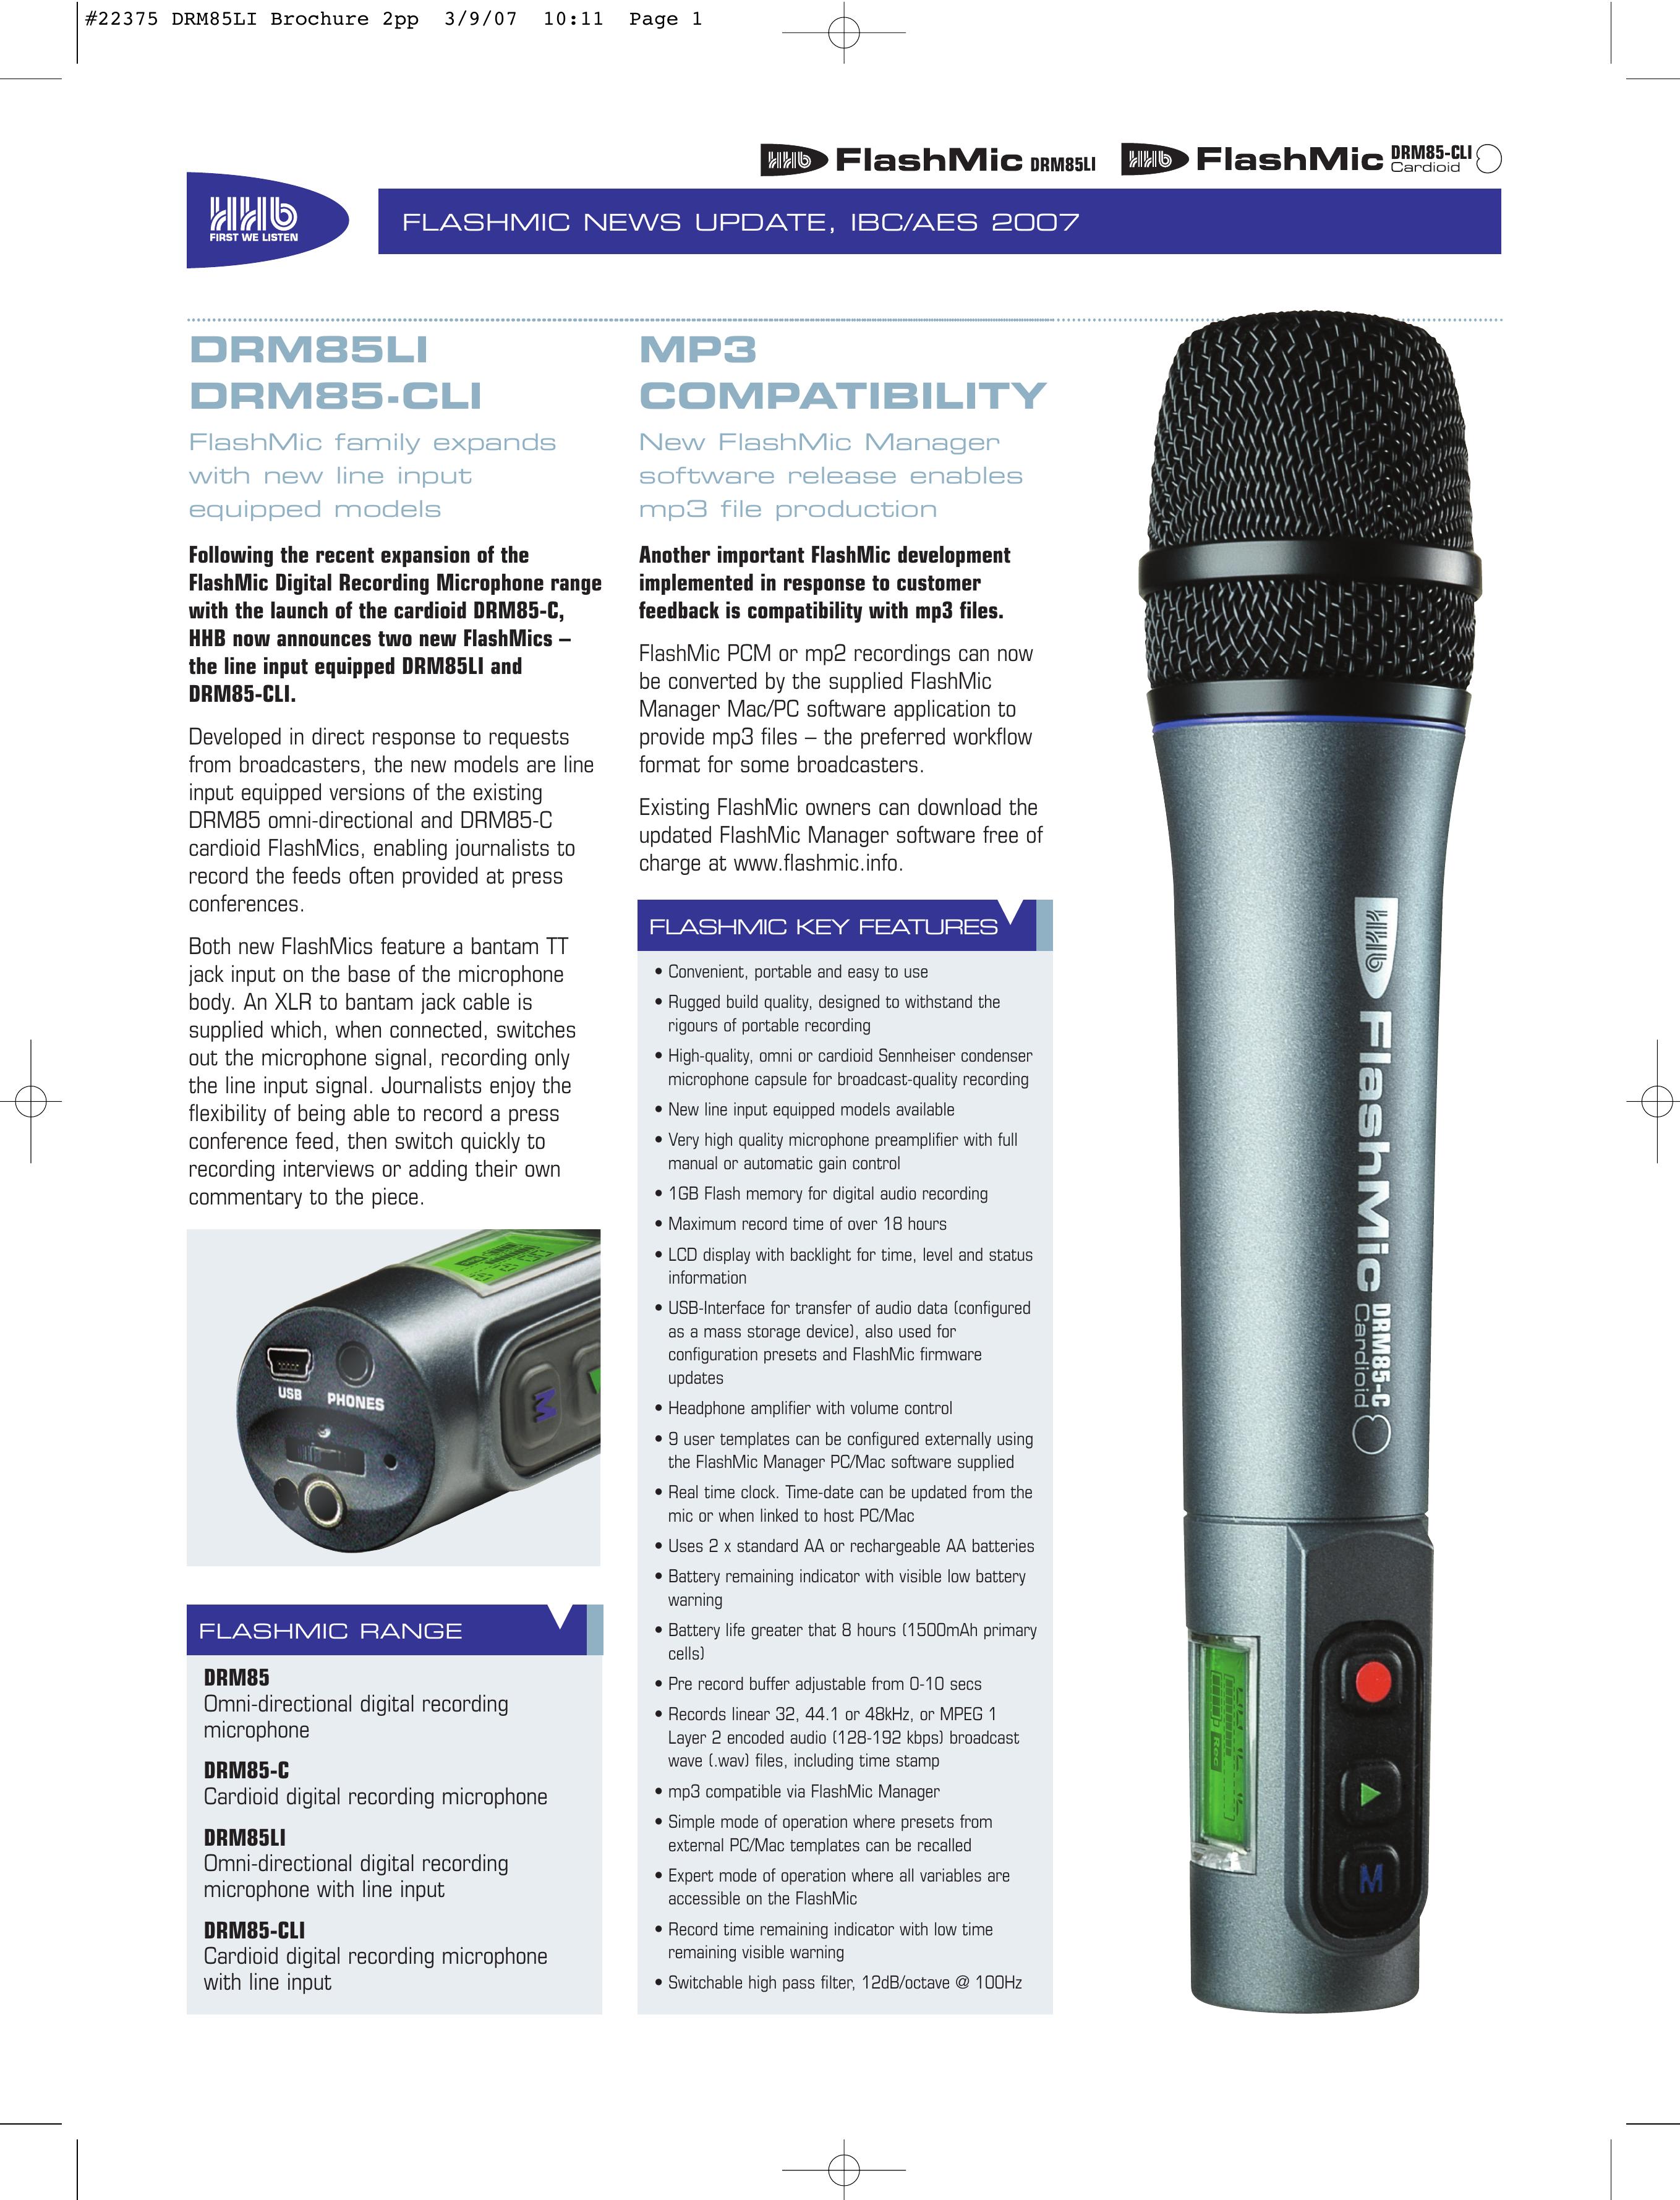 HHB comm DRM85LI Microphone User Manual